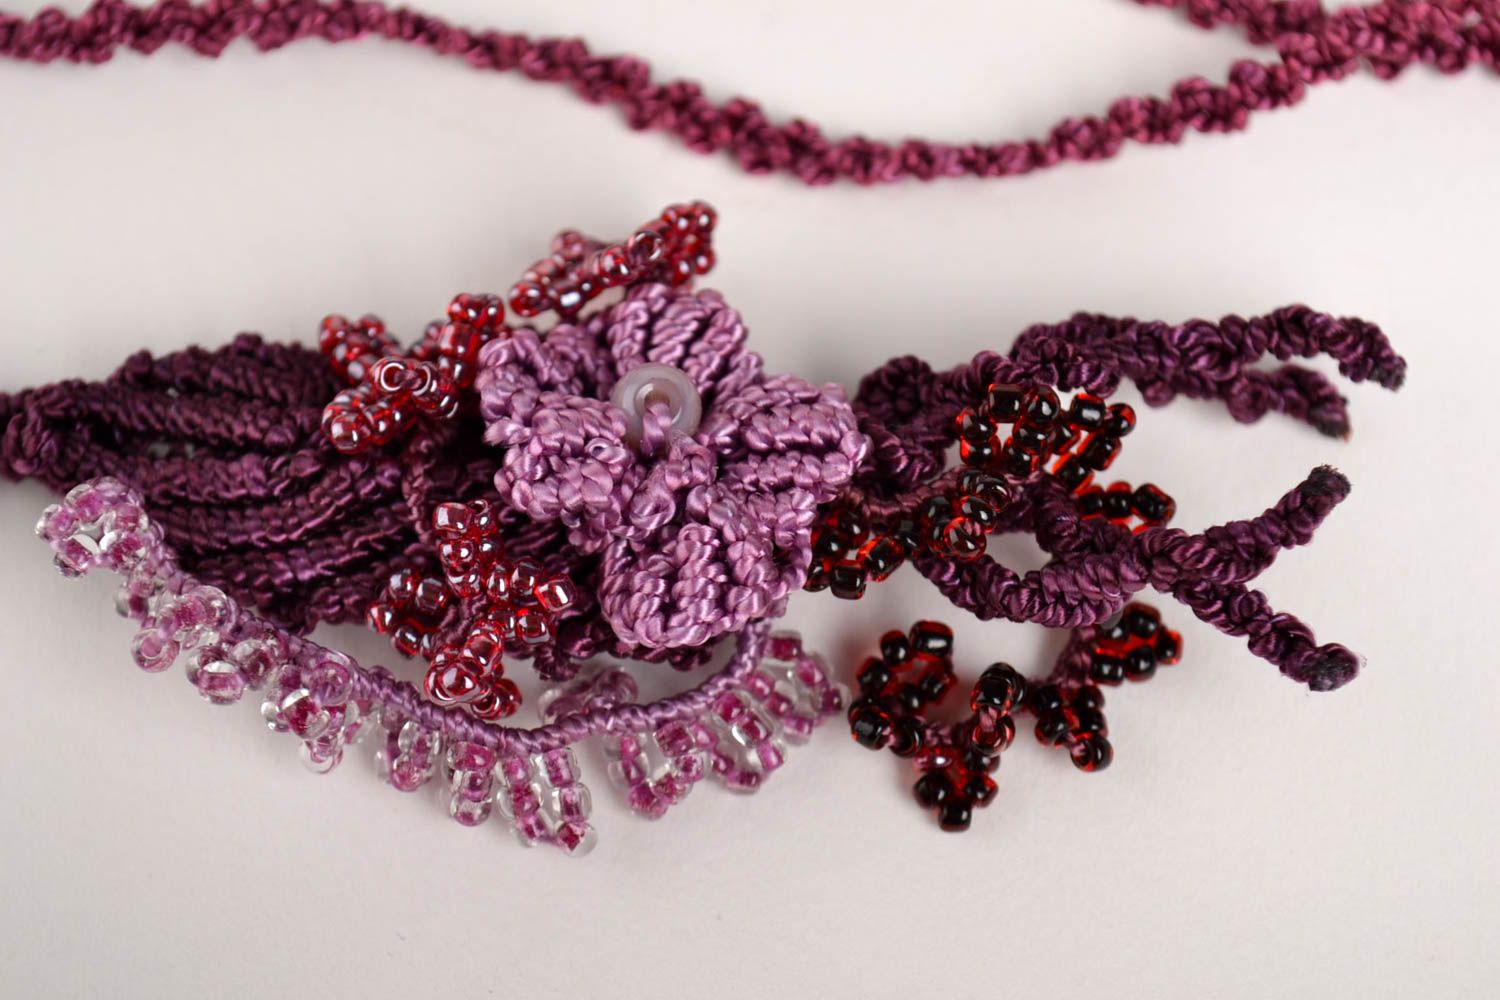 Handmade pendant fashion thread jewelry 5 pieces gift for women macrame ideas photo 5